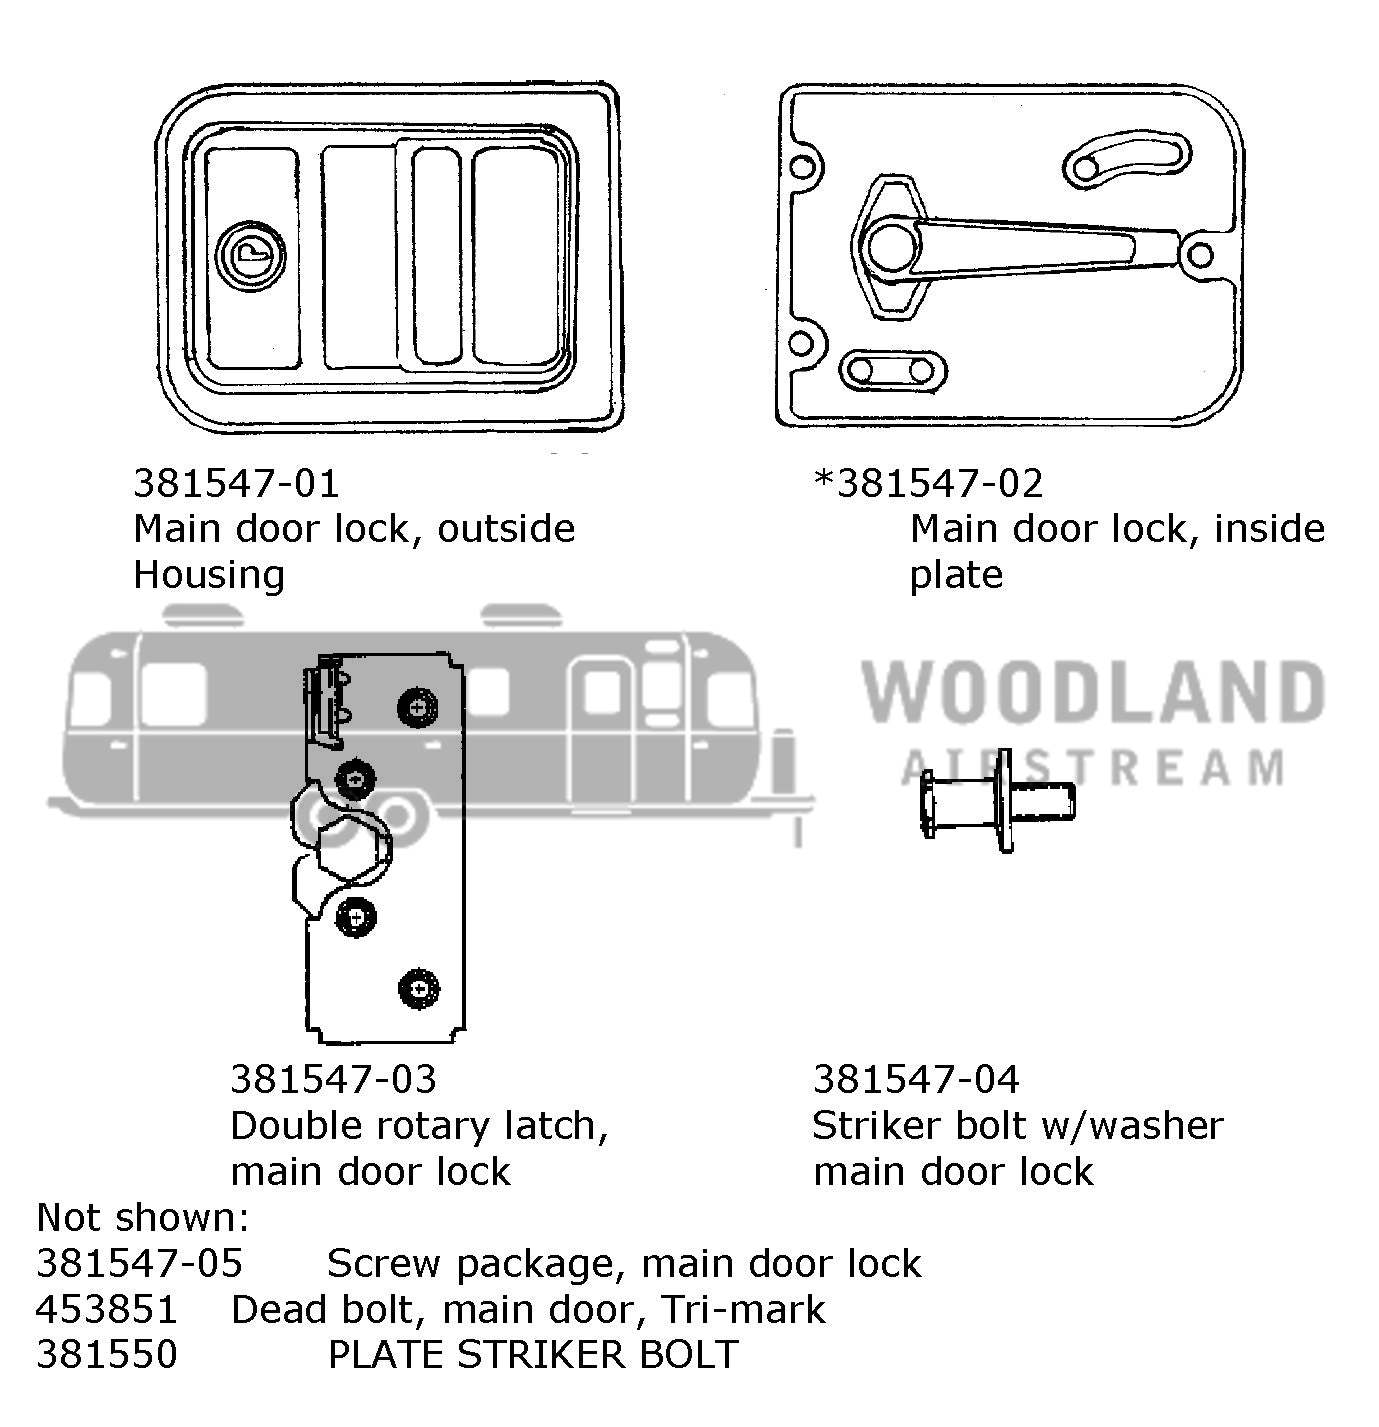 Airstream Screw Package for Main Door Lock - 381547-05